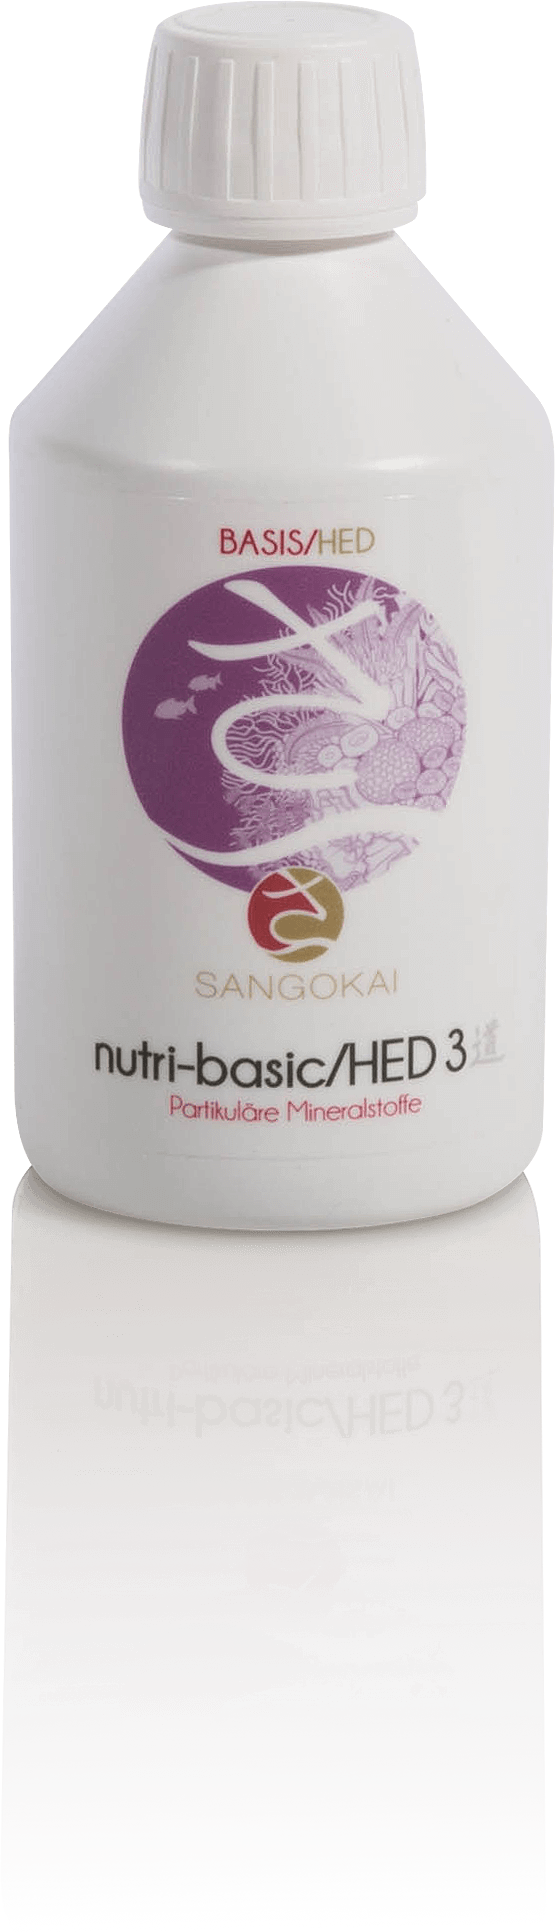 Sango nutri-basic/ HED  # 3  1000 ml